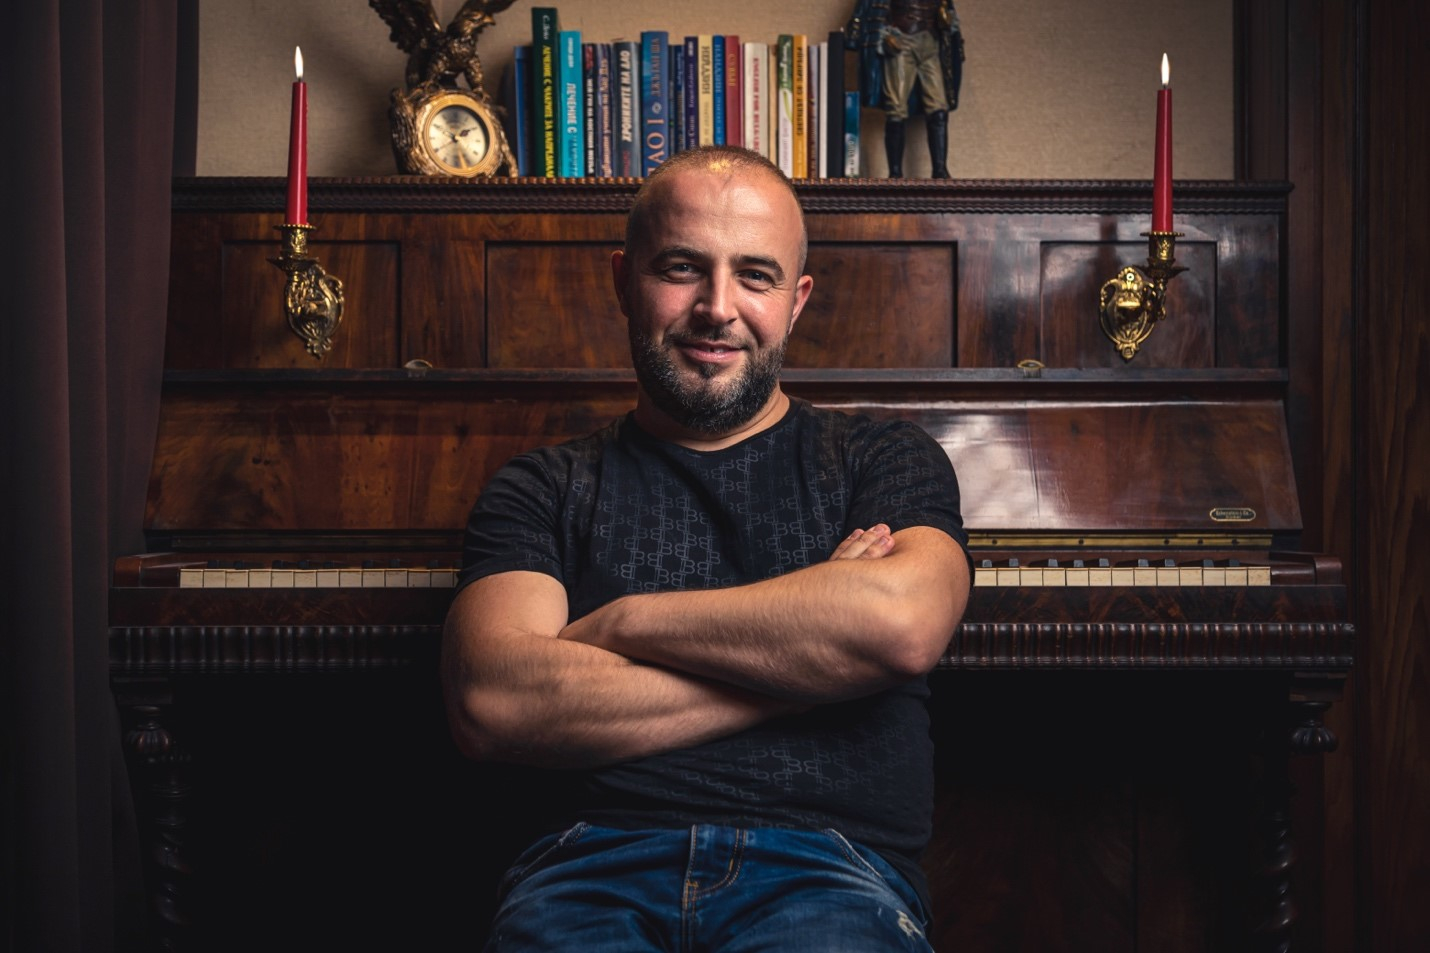 Тихомир Христозов - българинът, който композира за "Оскар" ВИДЕО